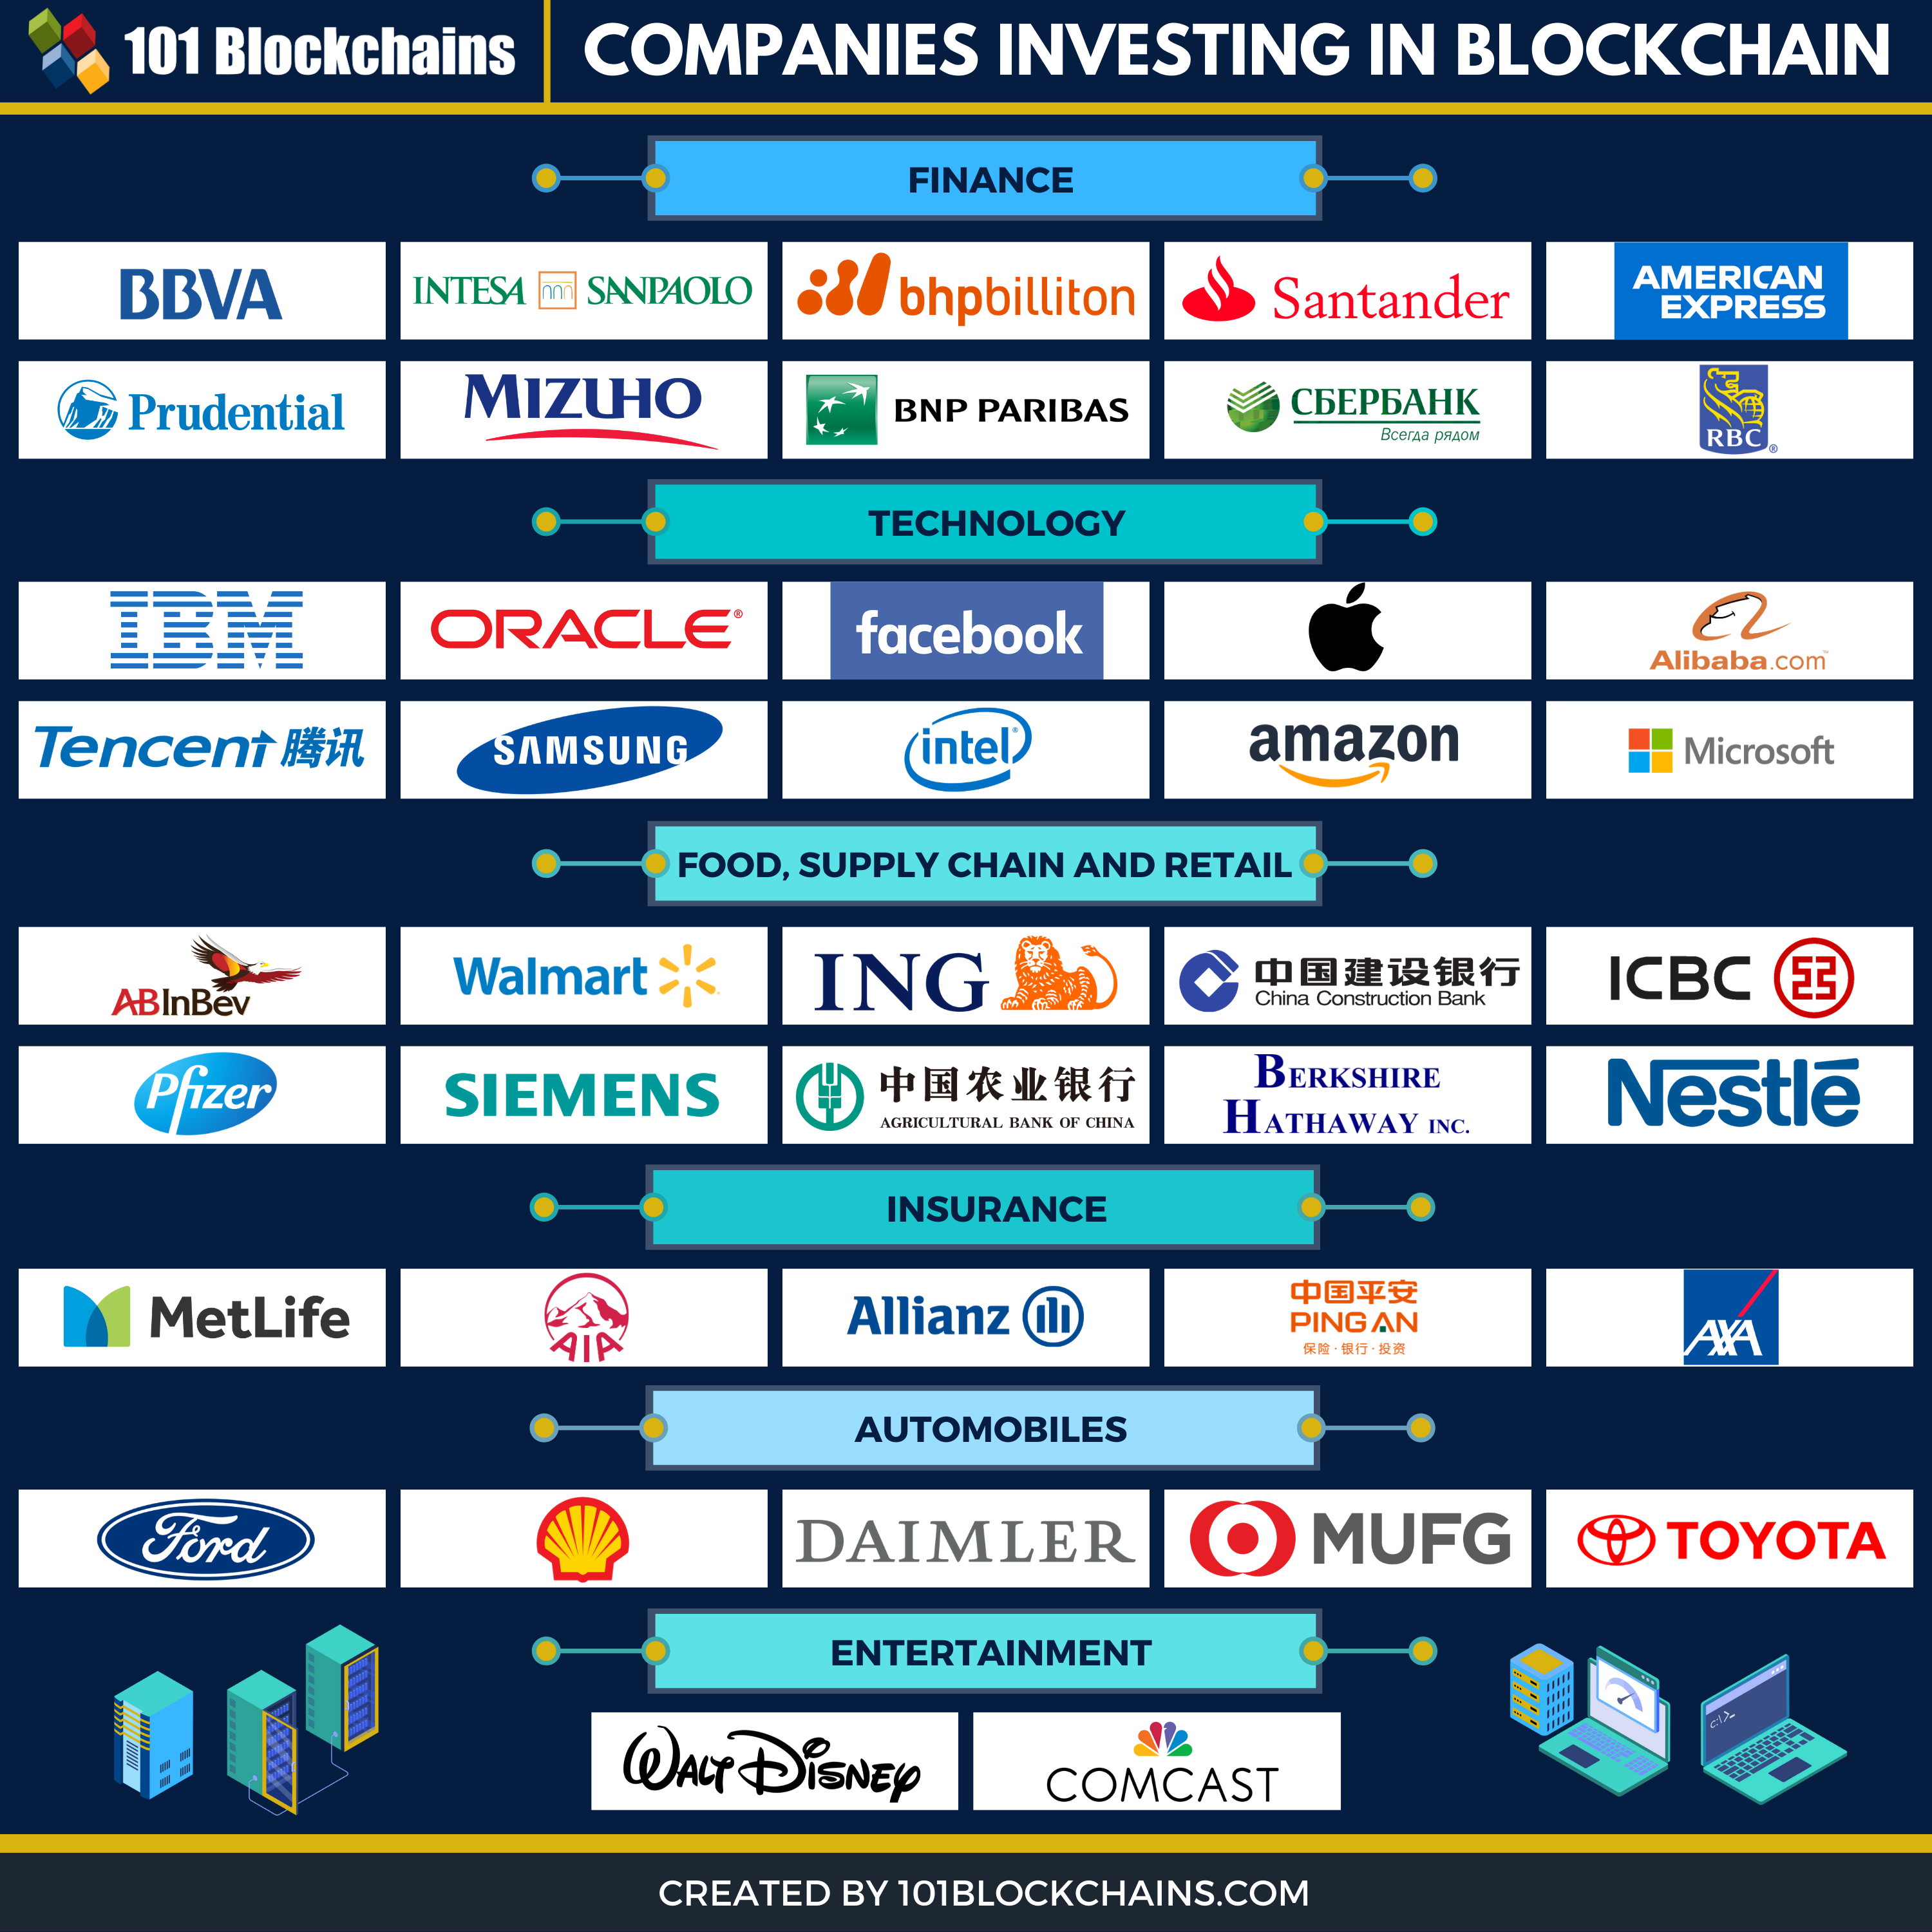 20 Biggest Blockchain Companies in the World in 